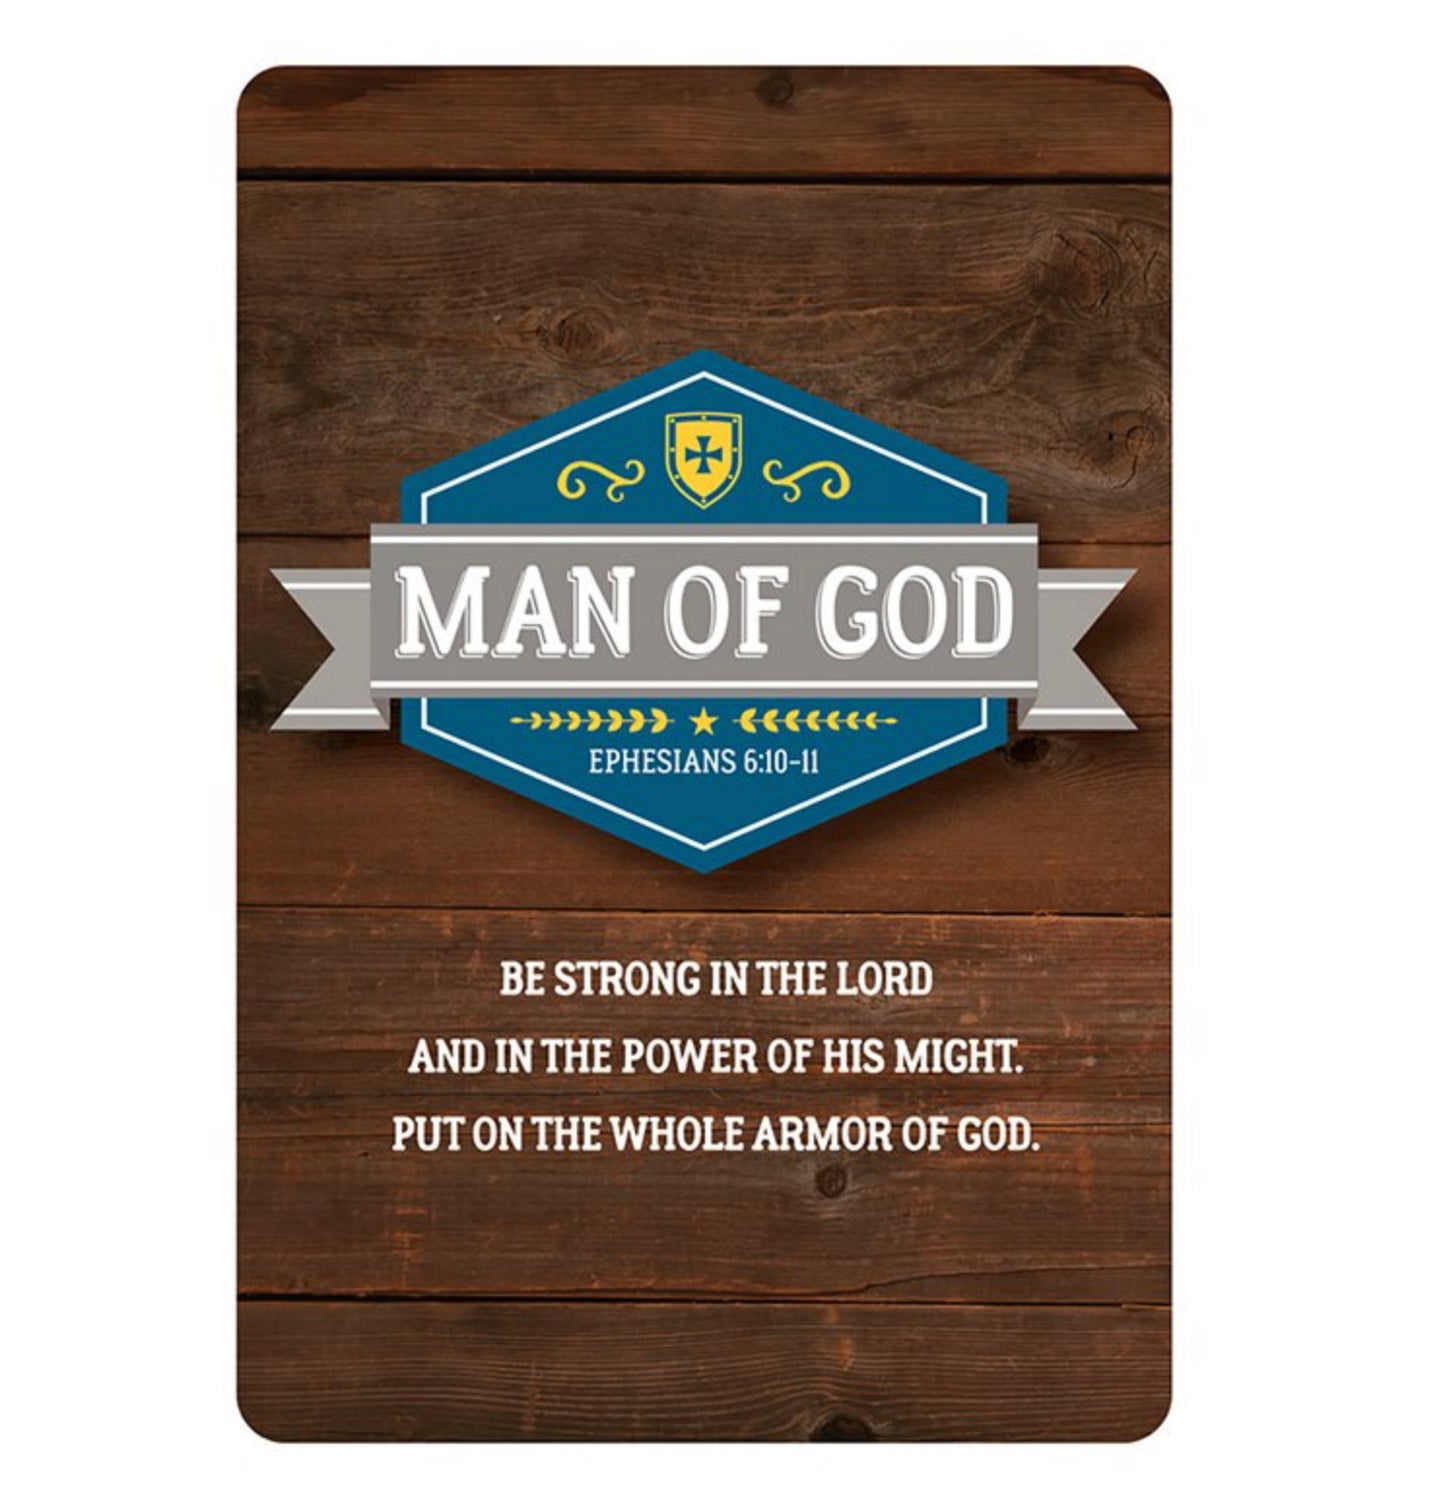 Man of God Key Chain